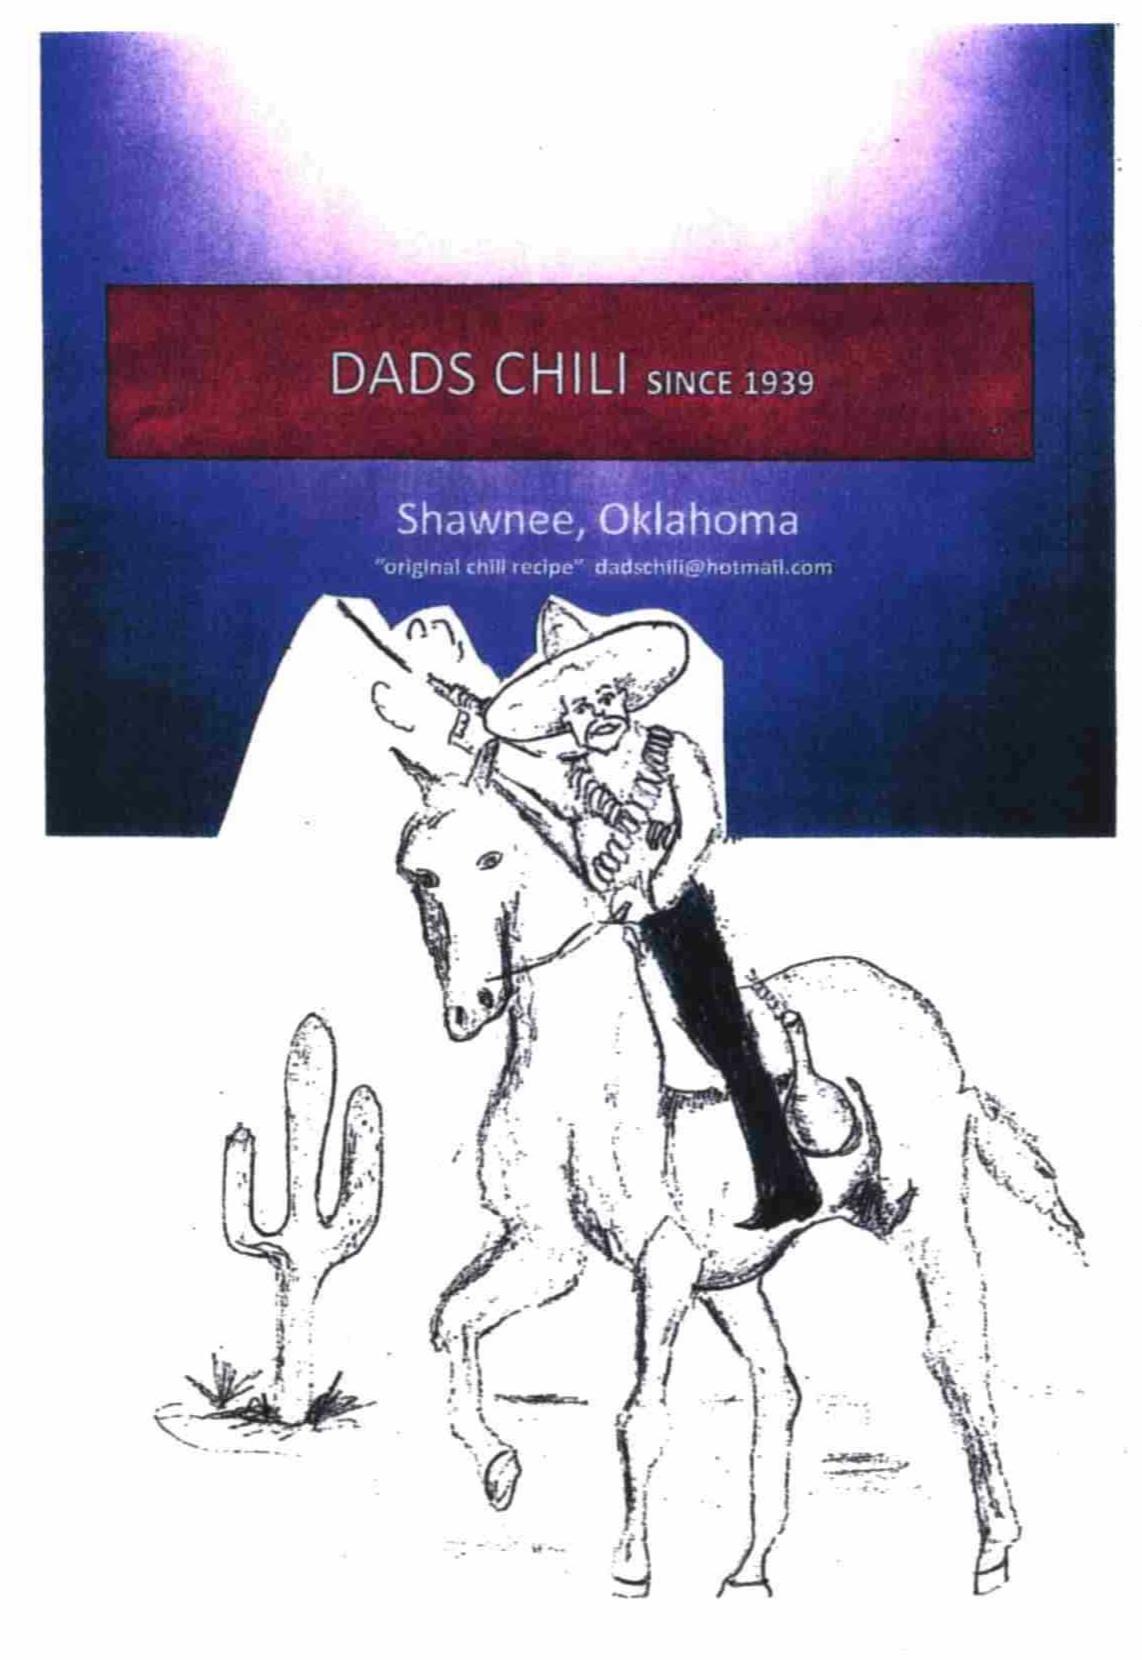  DADS CHILI SINCE 1939 SHAWNEE, OKLAHOMA "ORIGINAL CHILL RECIPE" DADSCHILI@HOTMAIL.COM